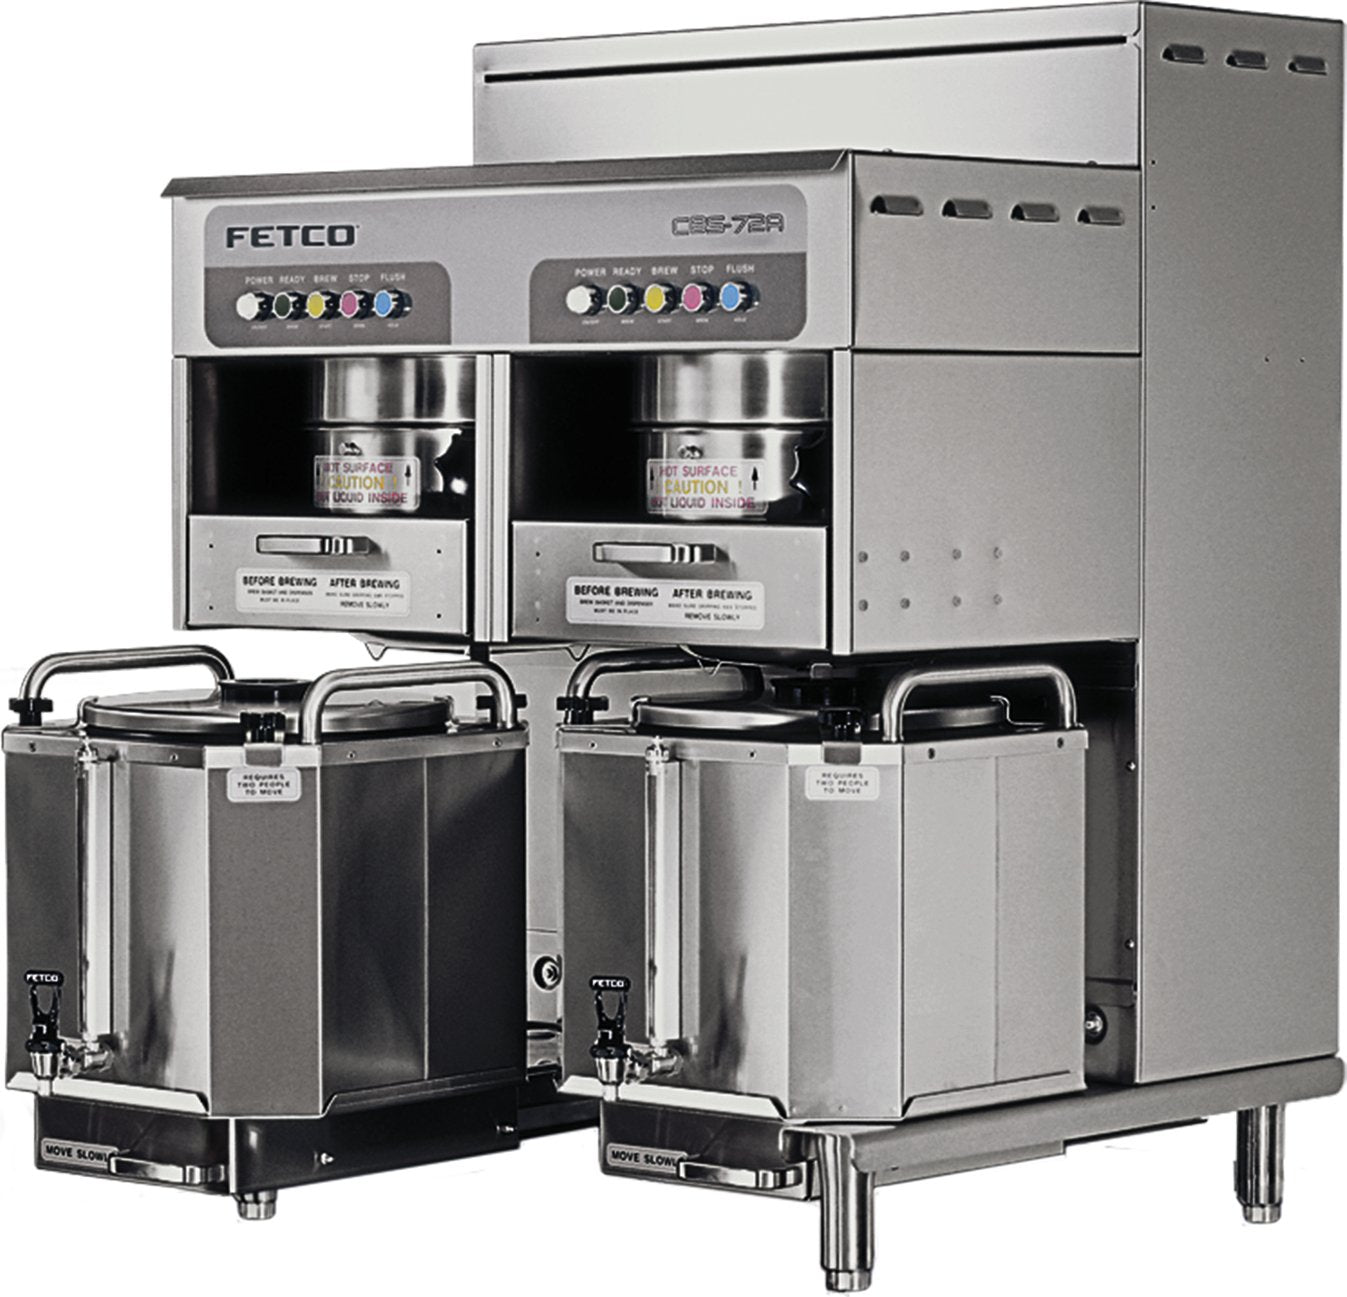 Fetco - High Volume Dual Station Coffee Brewing System 2 x (3x5) kW 120/208-240V - CBS-72A